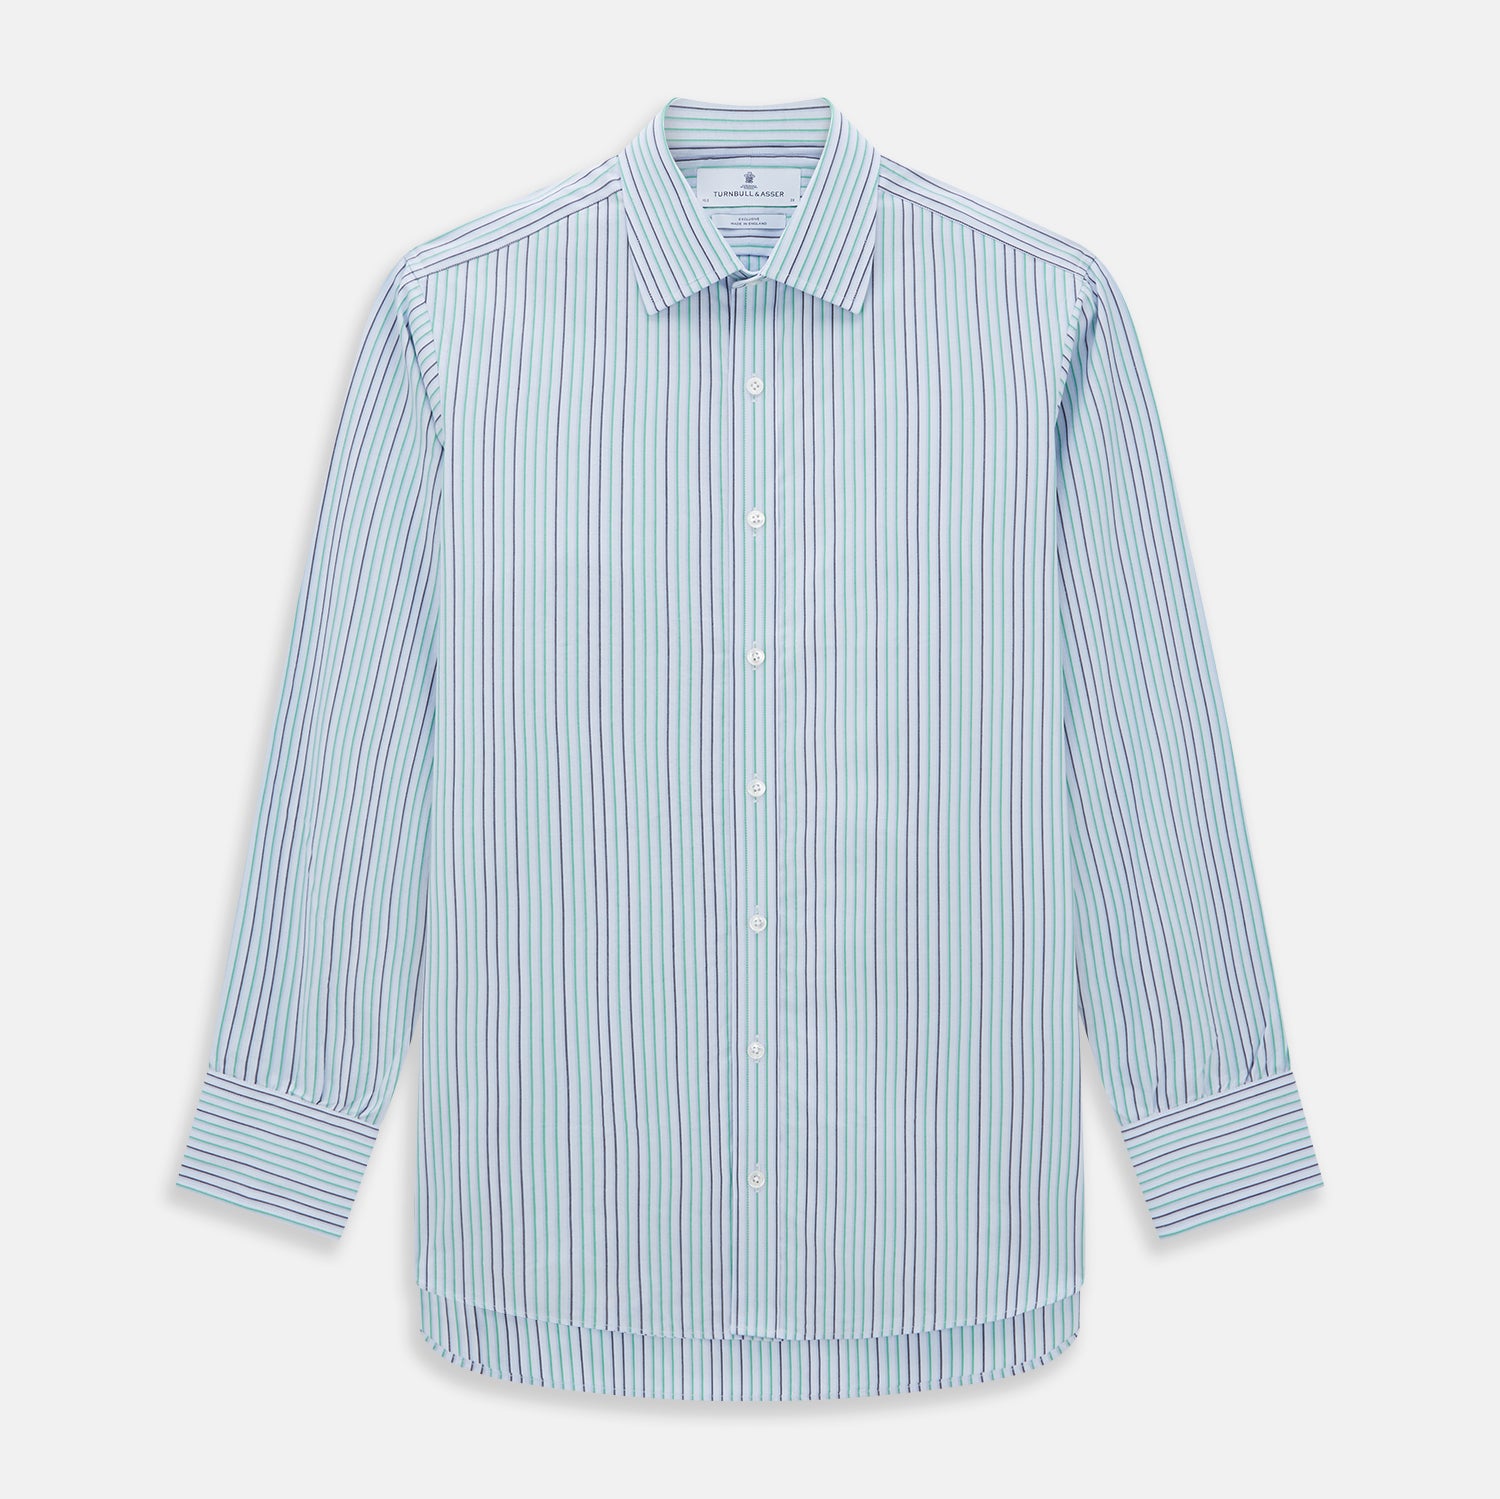 Green and Blue Shadow Pinstripe Mayfair Shirt – Turnbull & Asser